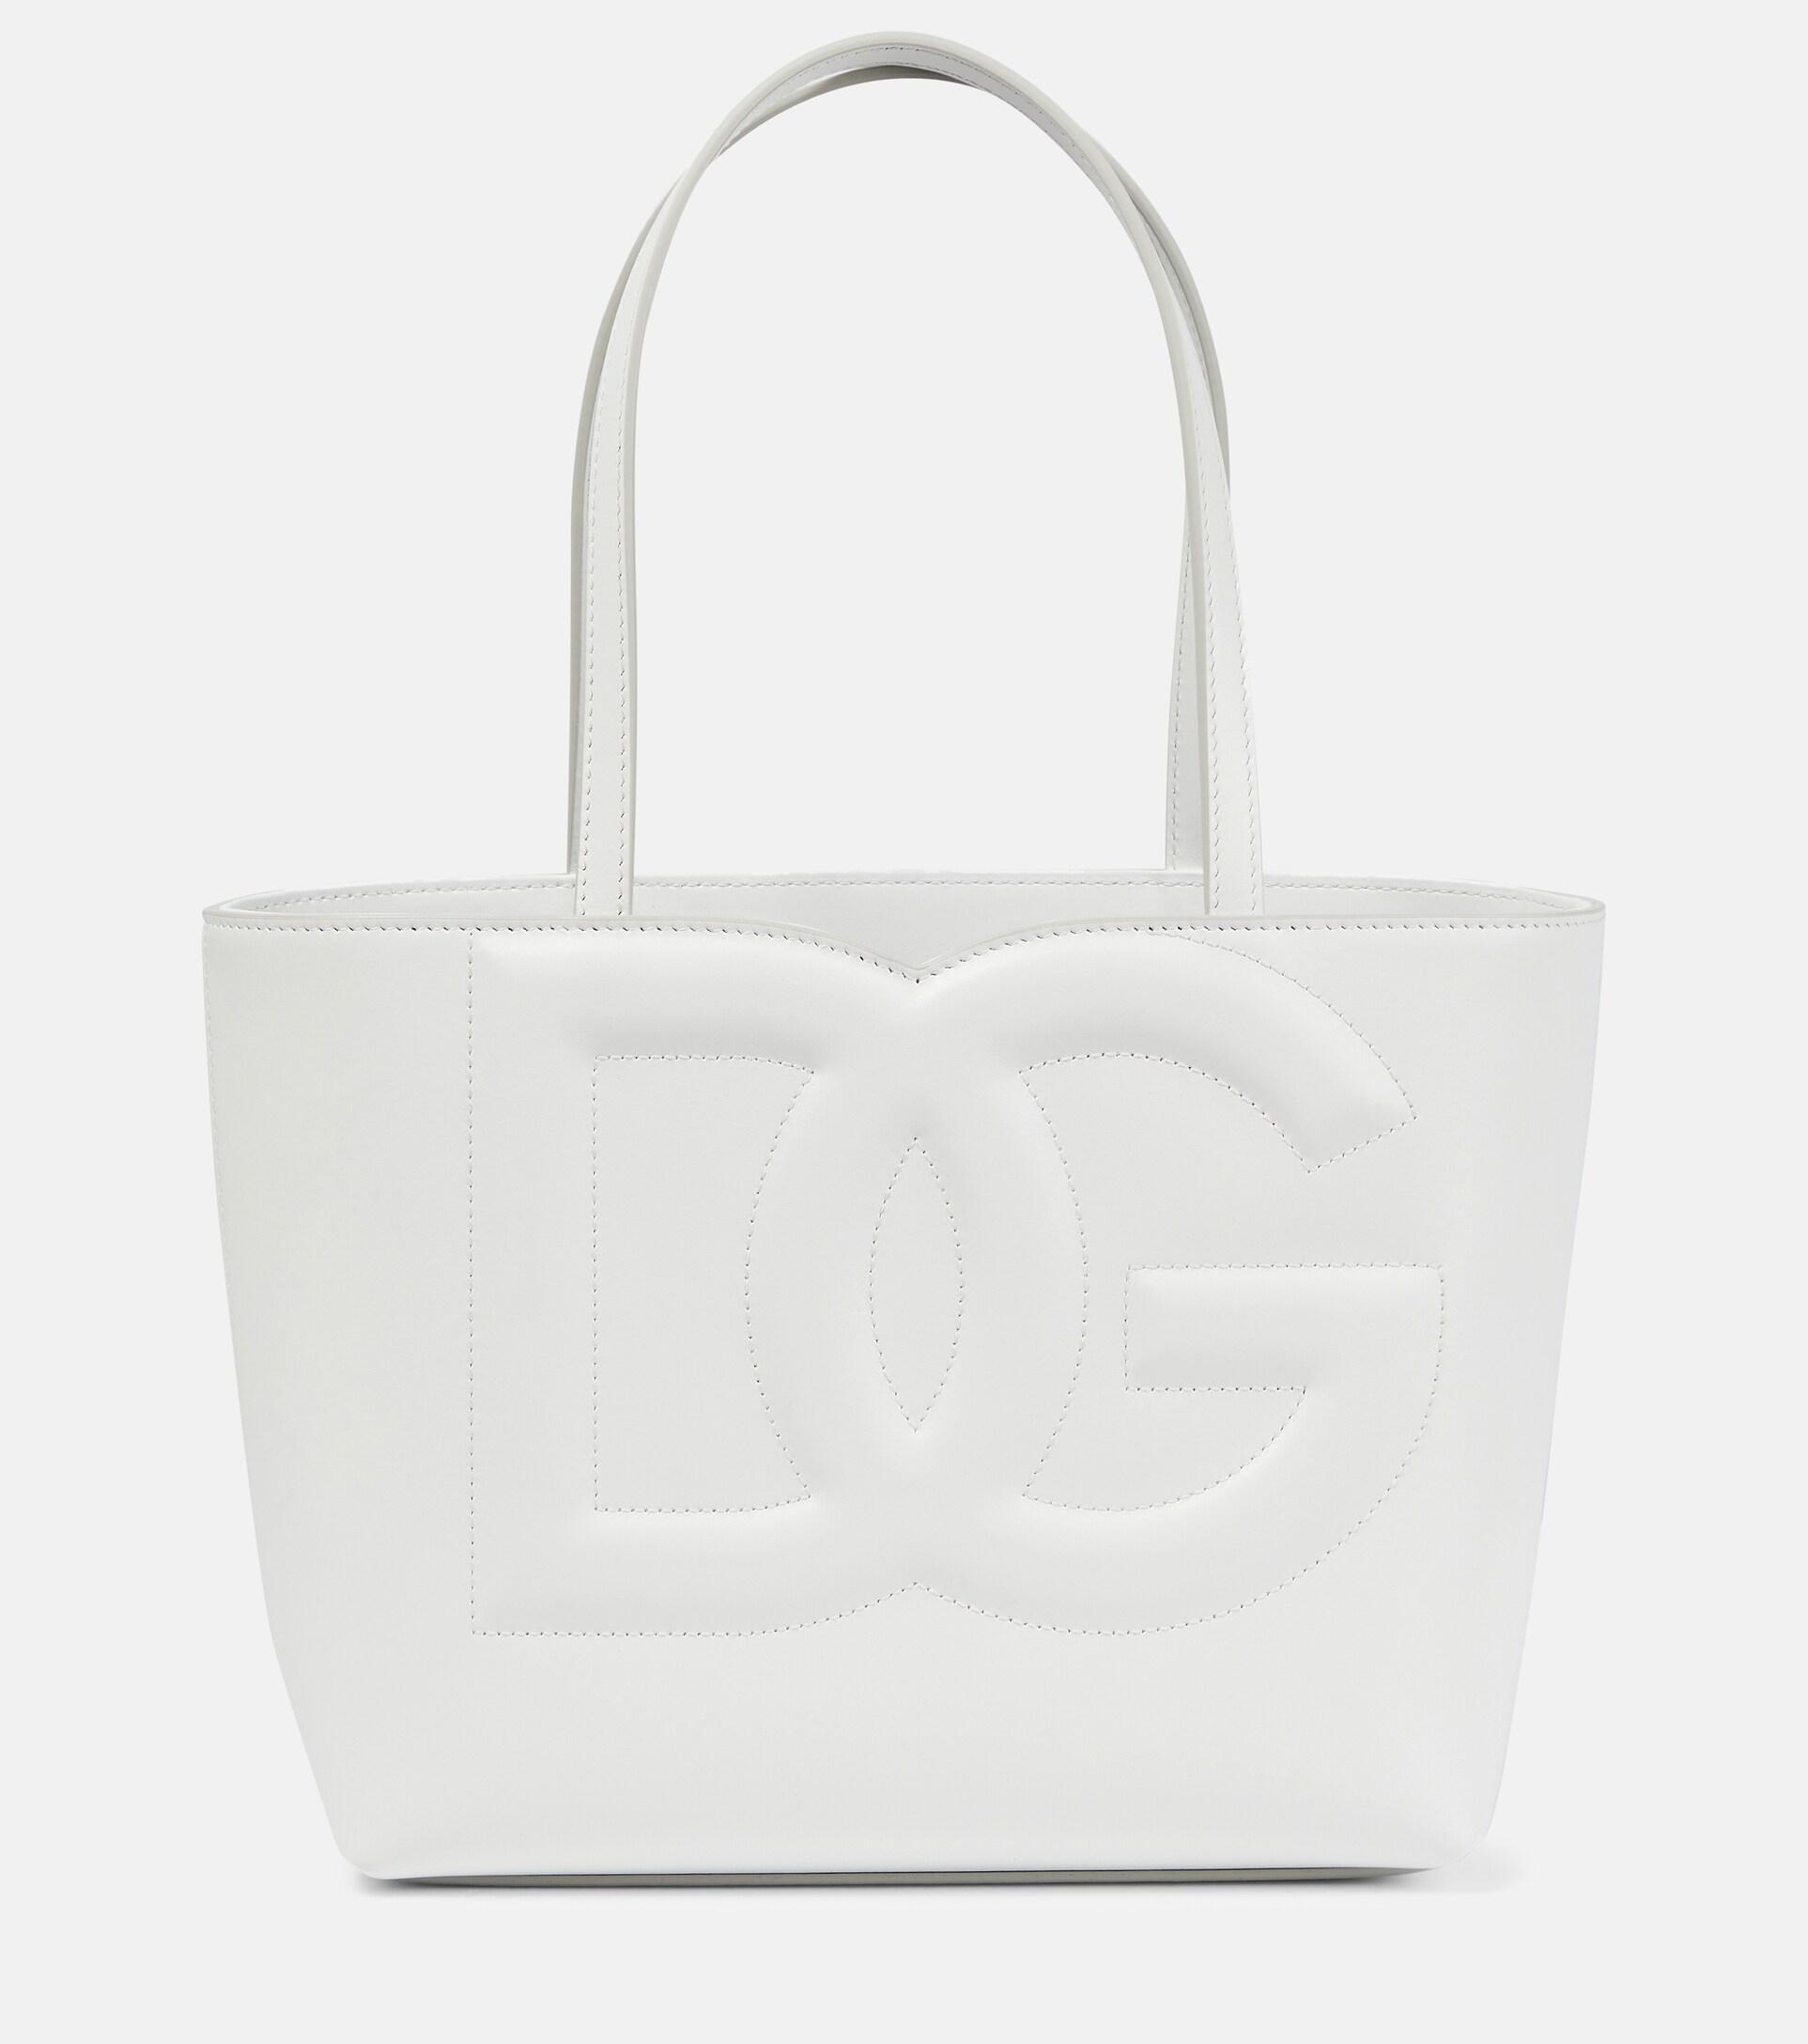 Dolce & Gabbana Dg Medium Leather Tote Bag in White | Lyst